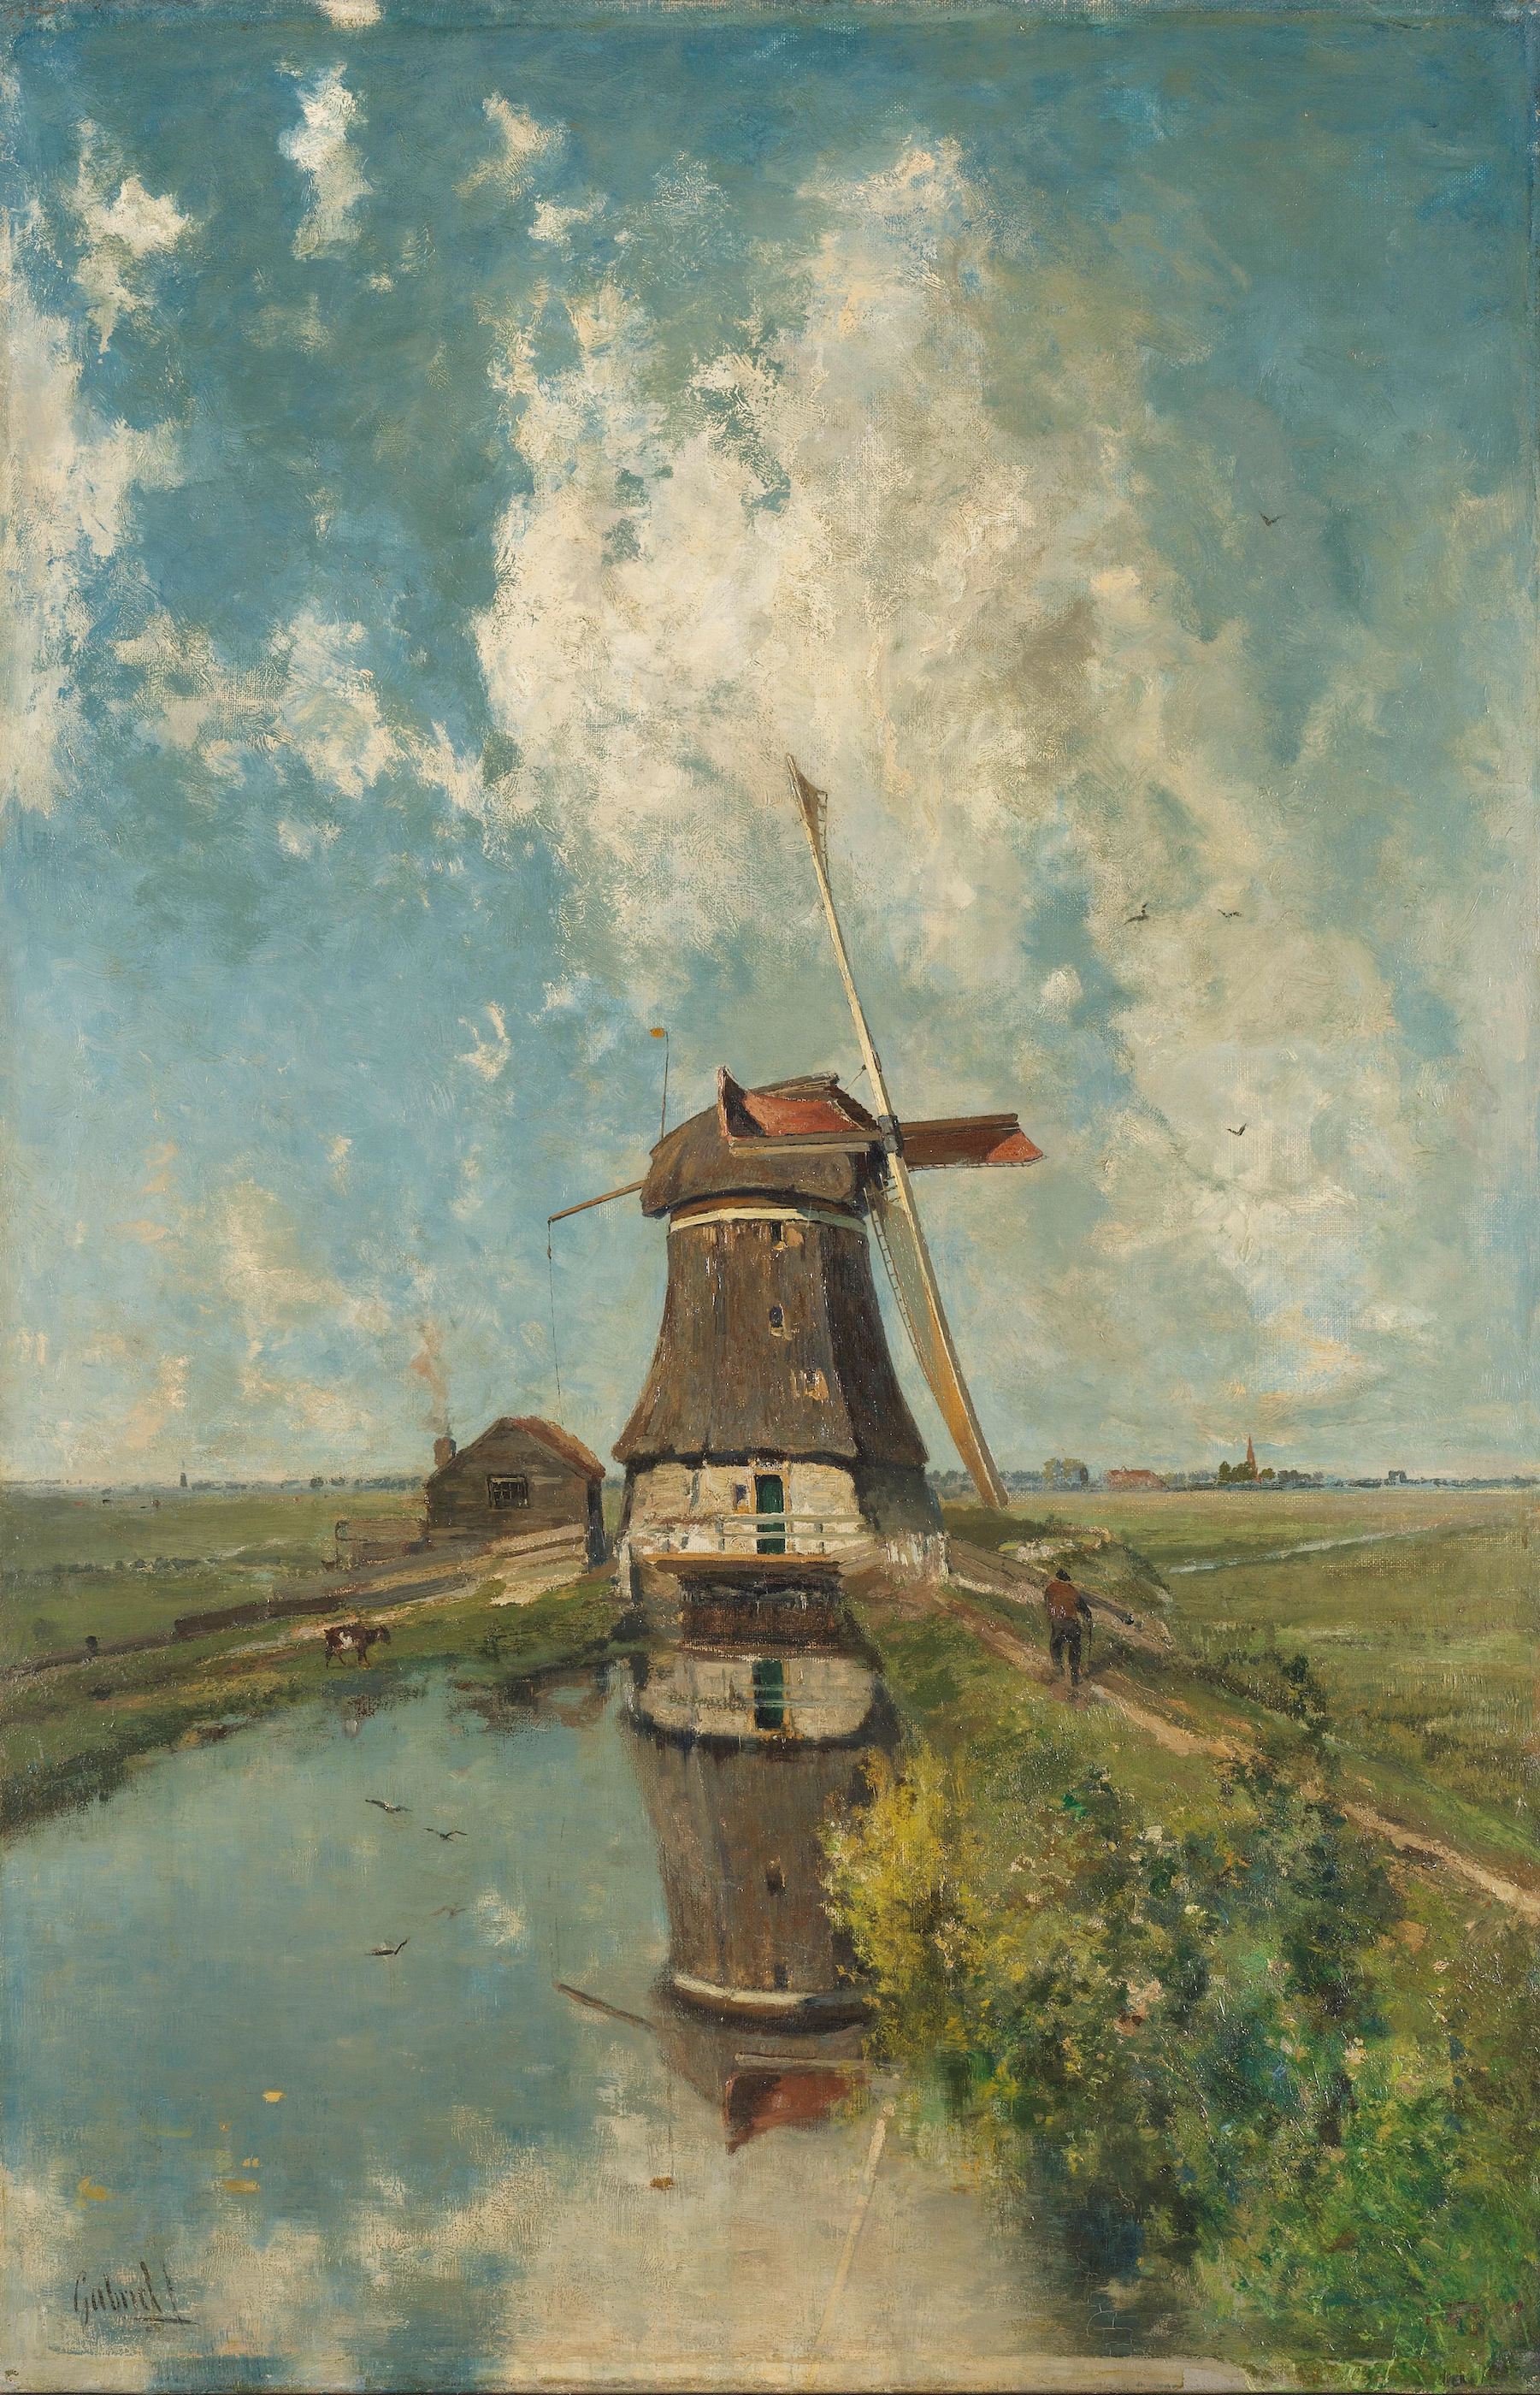 A Windmill on a Polder Waterway by Paul Gabriël - c. 1889 - 102 × 66 cm Rijksmuseum